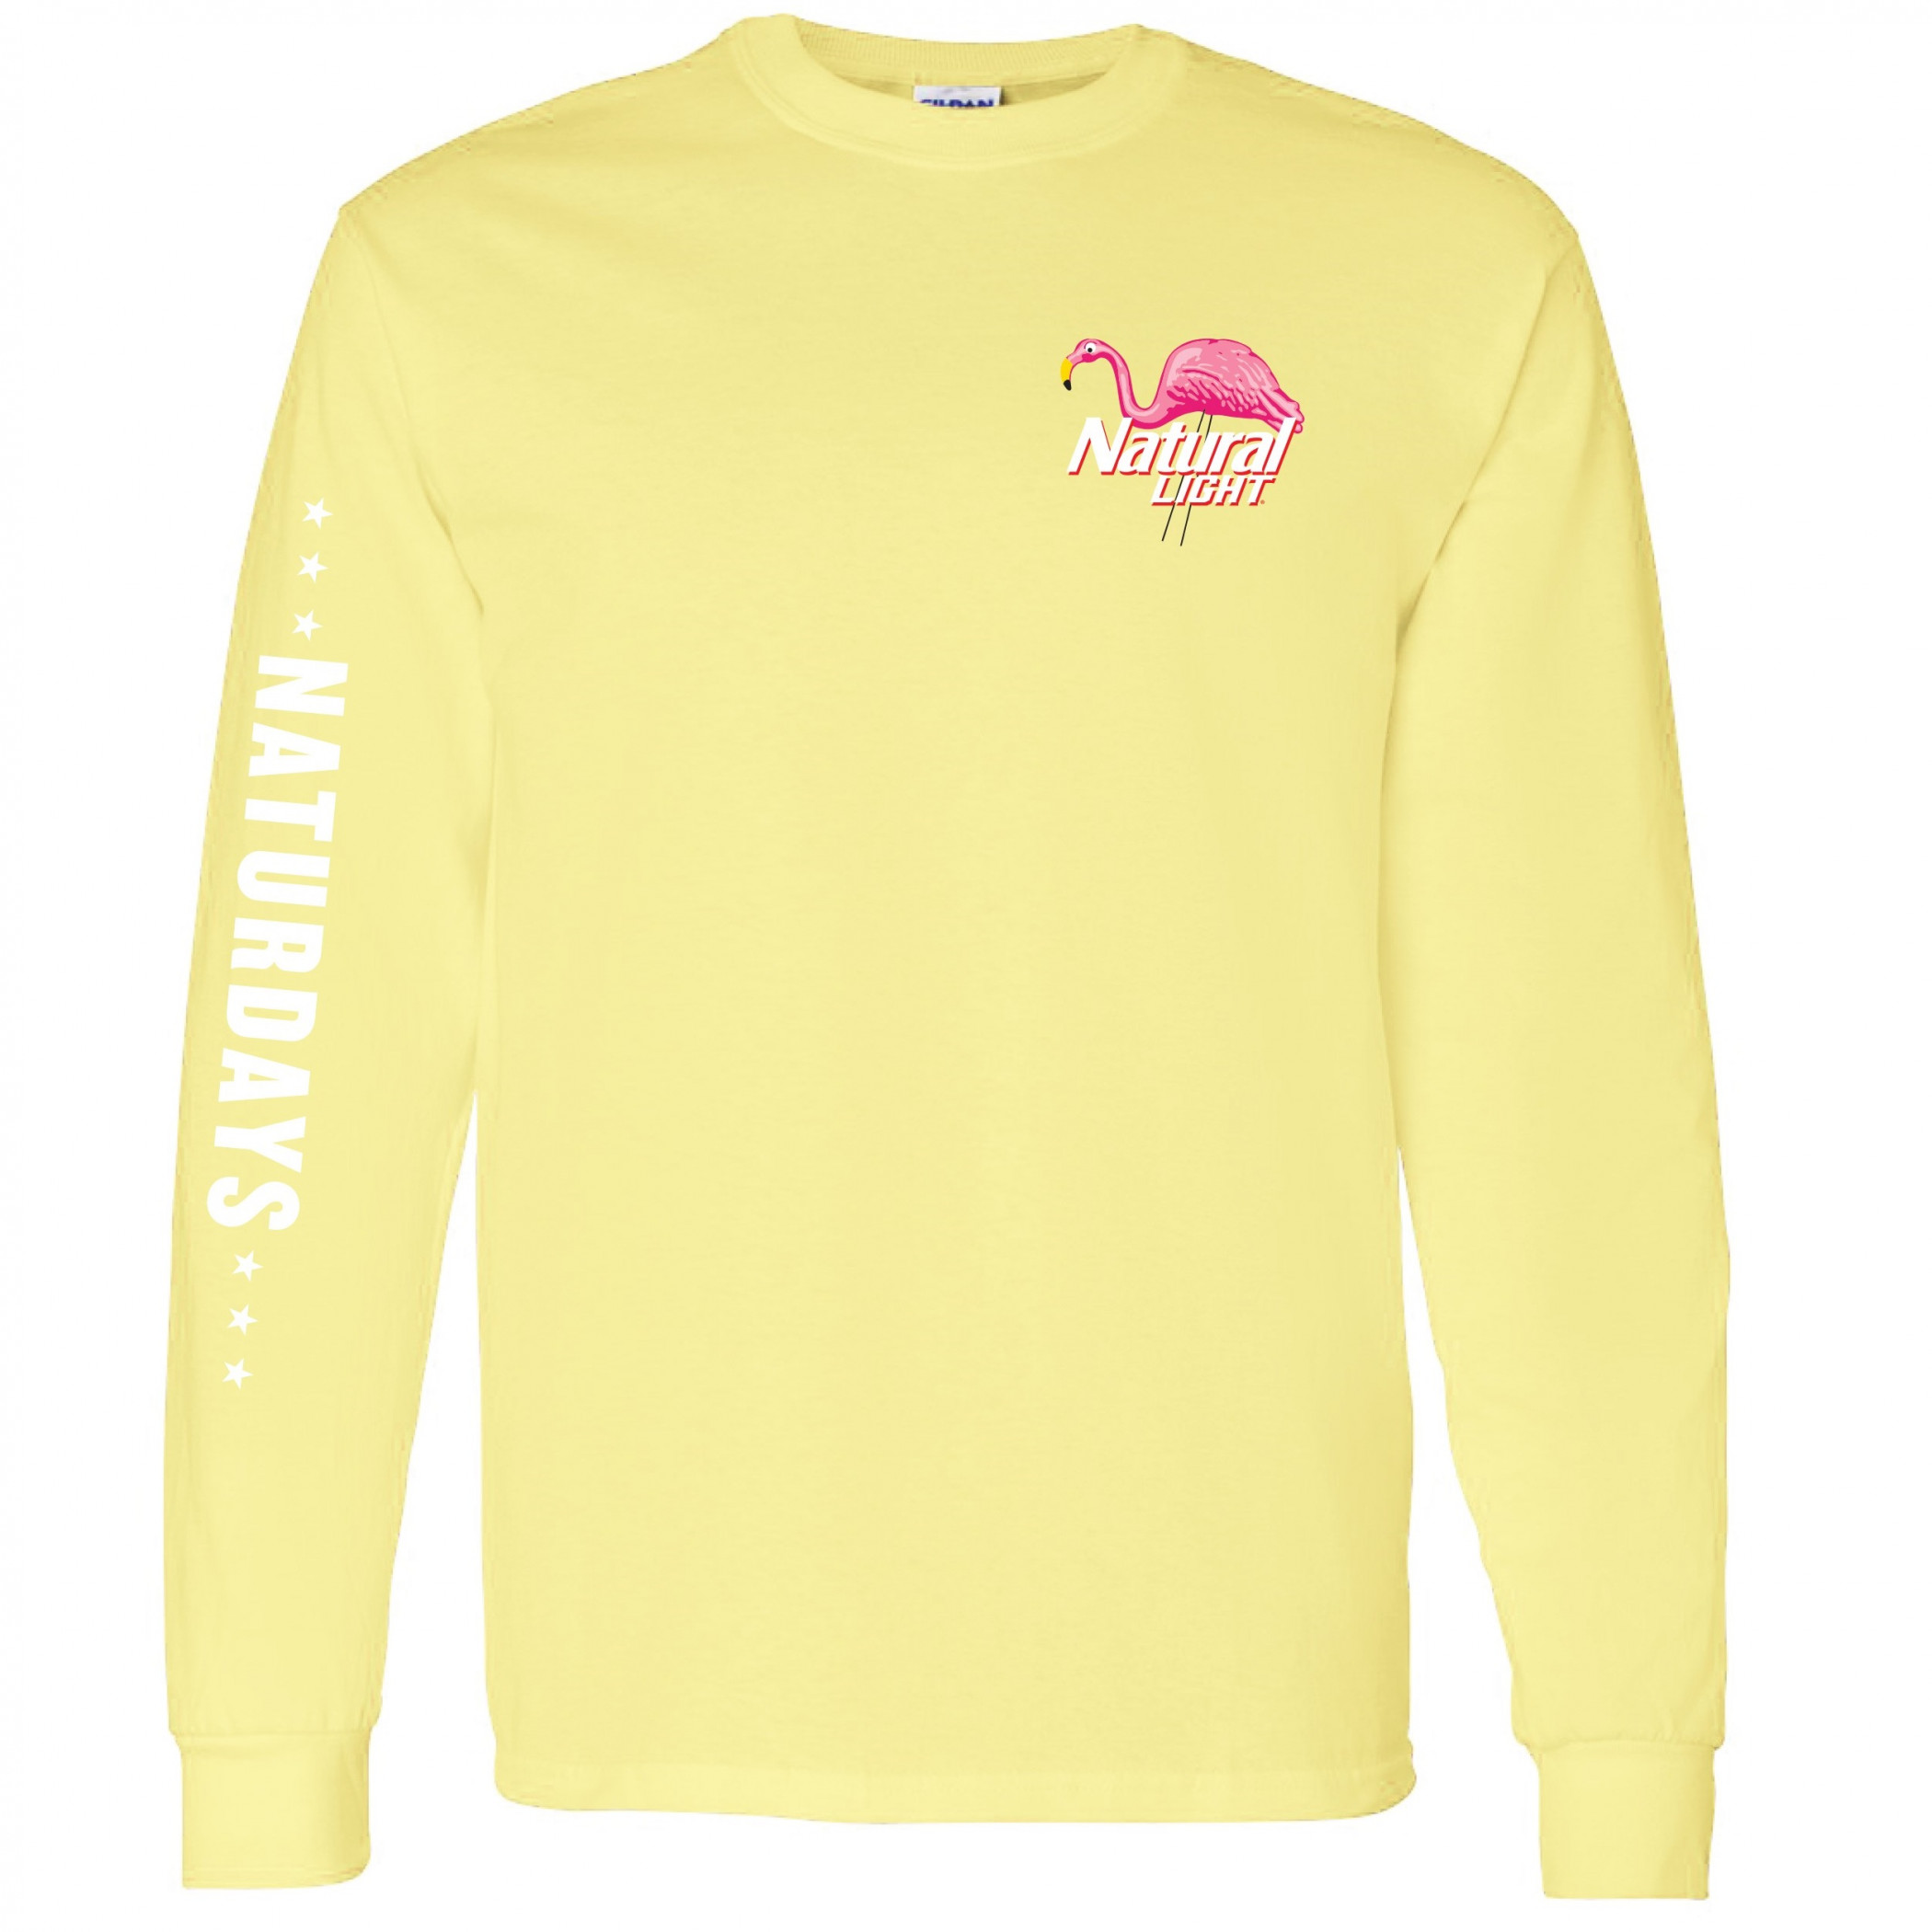 Natural Light Naturdays Flamingo Yellow Long Sleeve Shirt